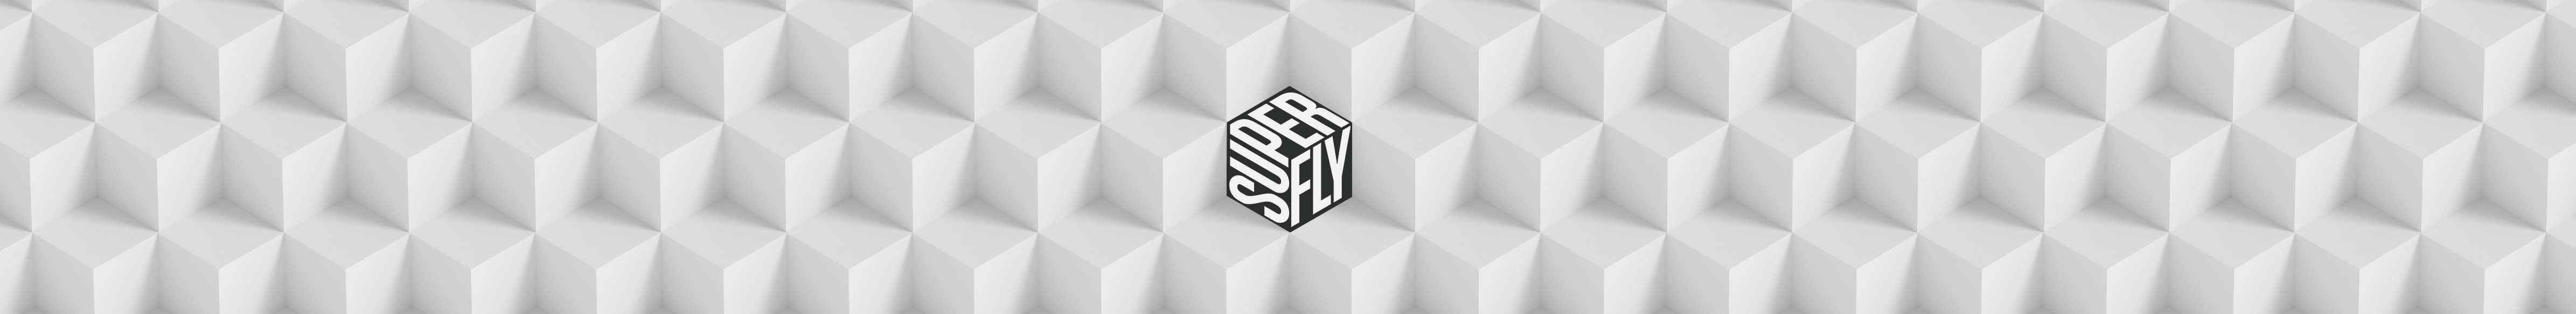 SUPERFLY STUDIO's profile banner